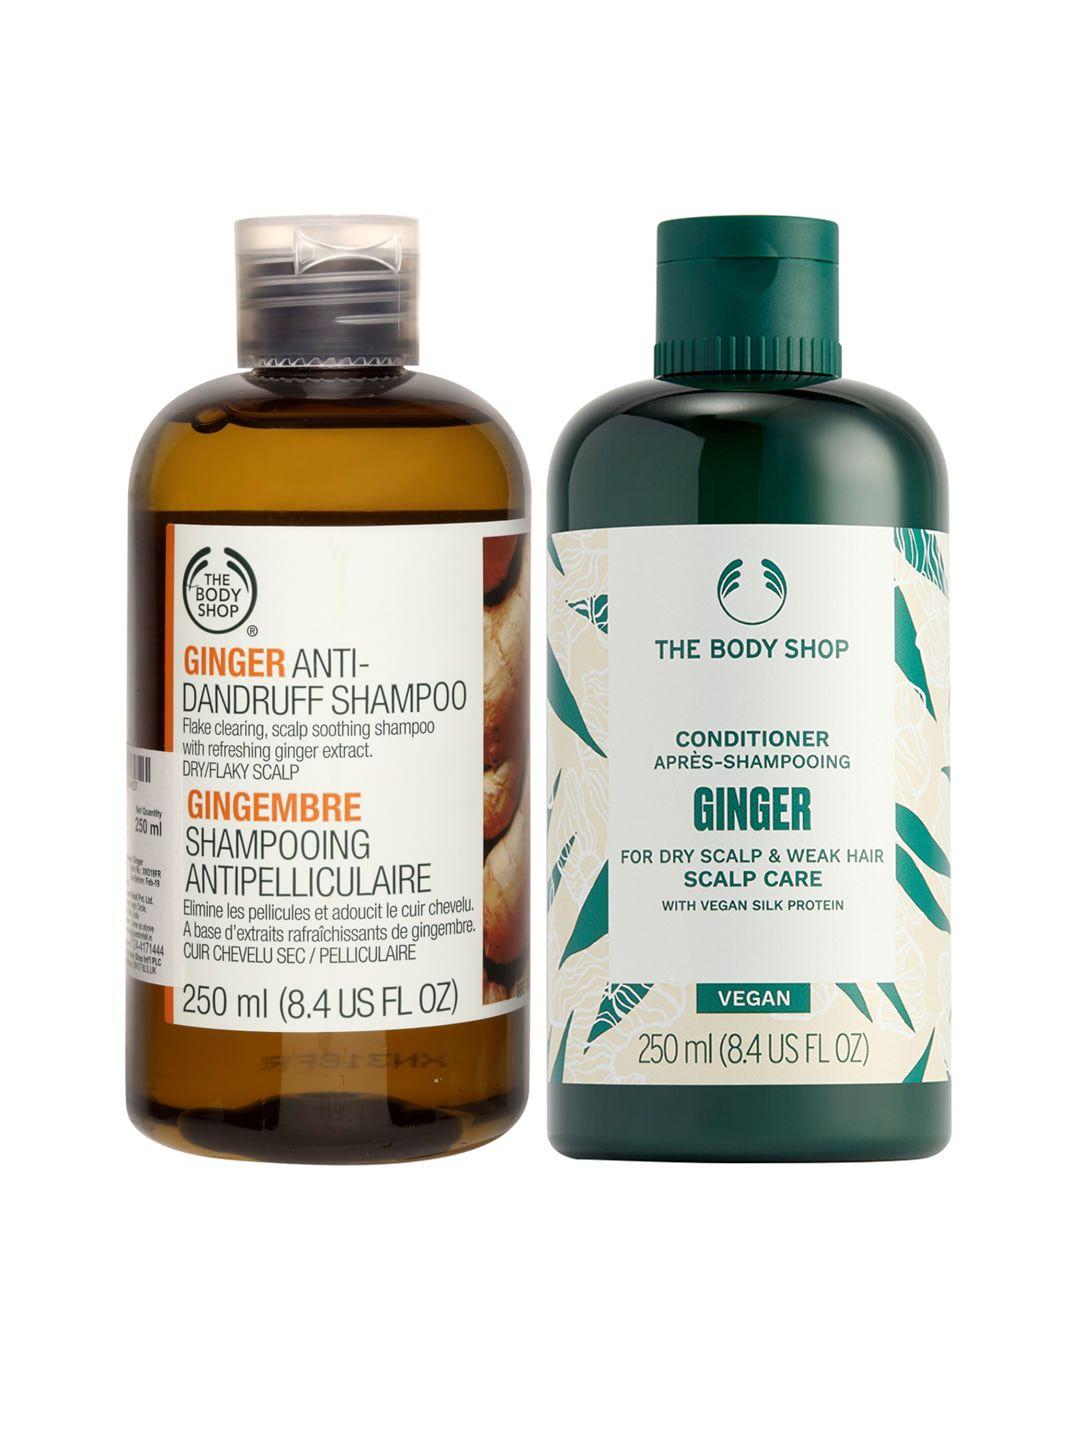 the body shop set of ginger anti-dandruff shampoo & scalp care conditioner - 250 ml each